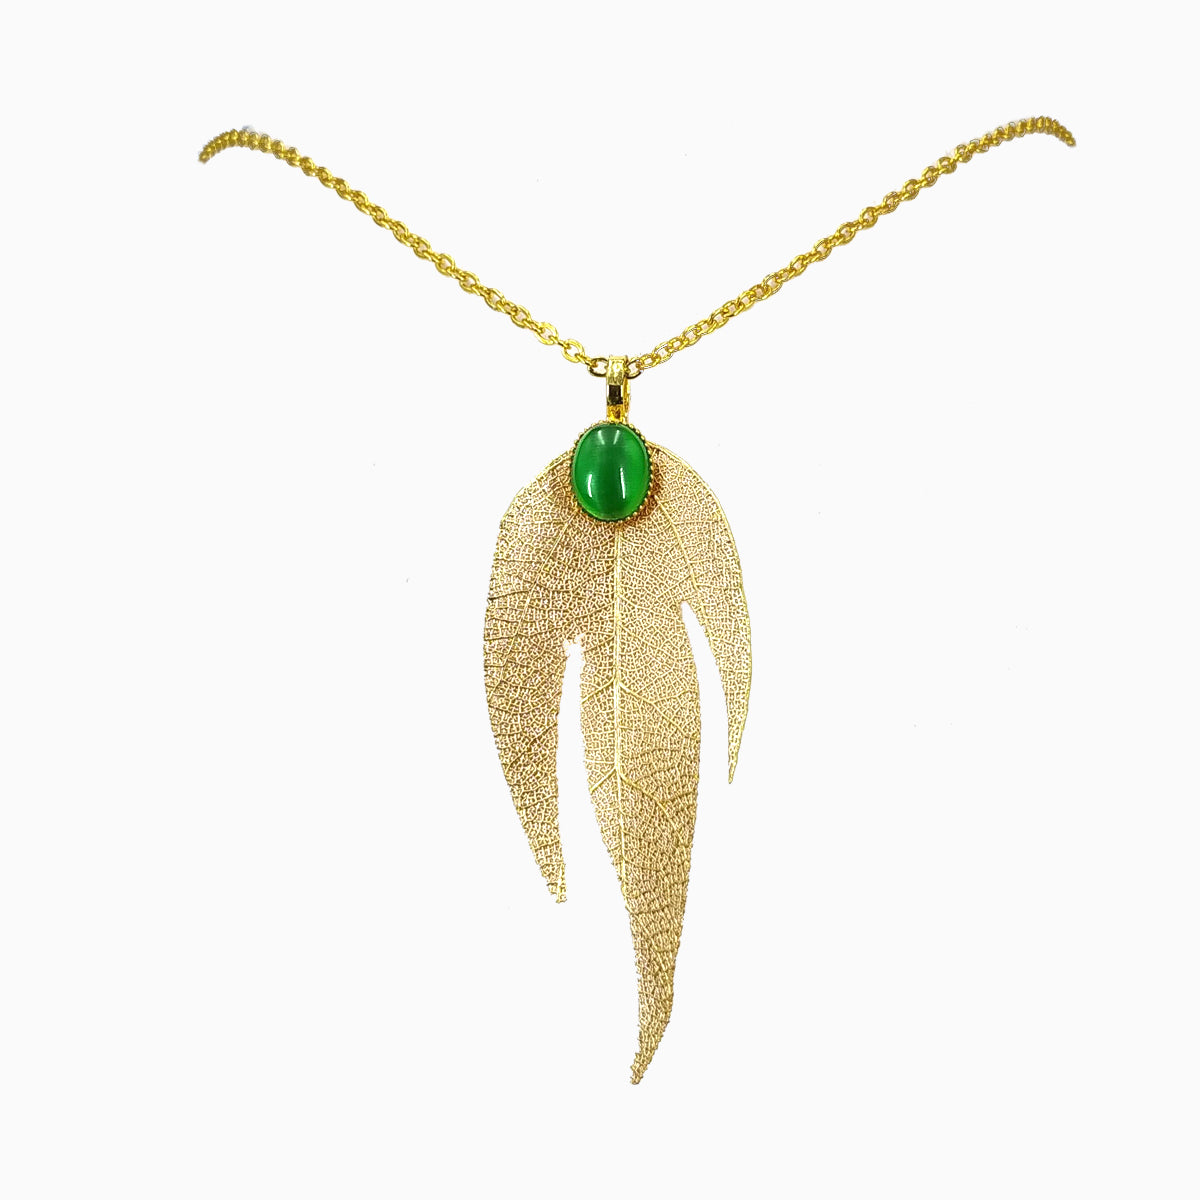 The Leaf of Life - Real Leaf Pendant Necklace